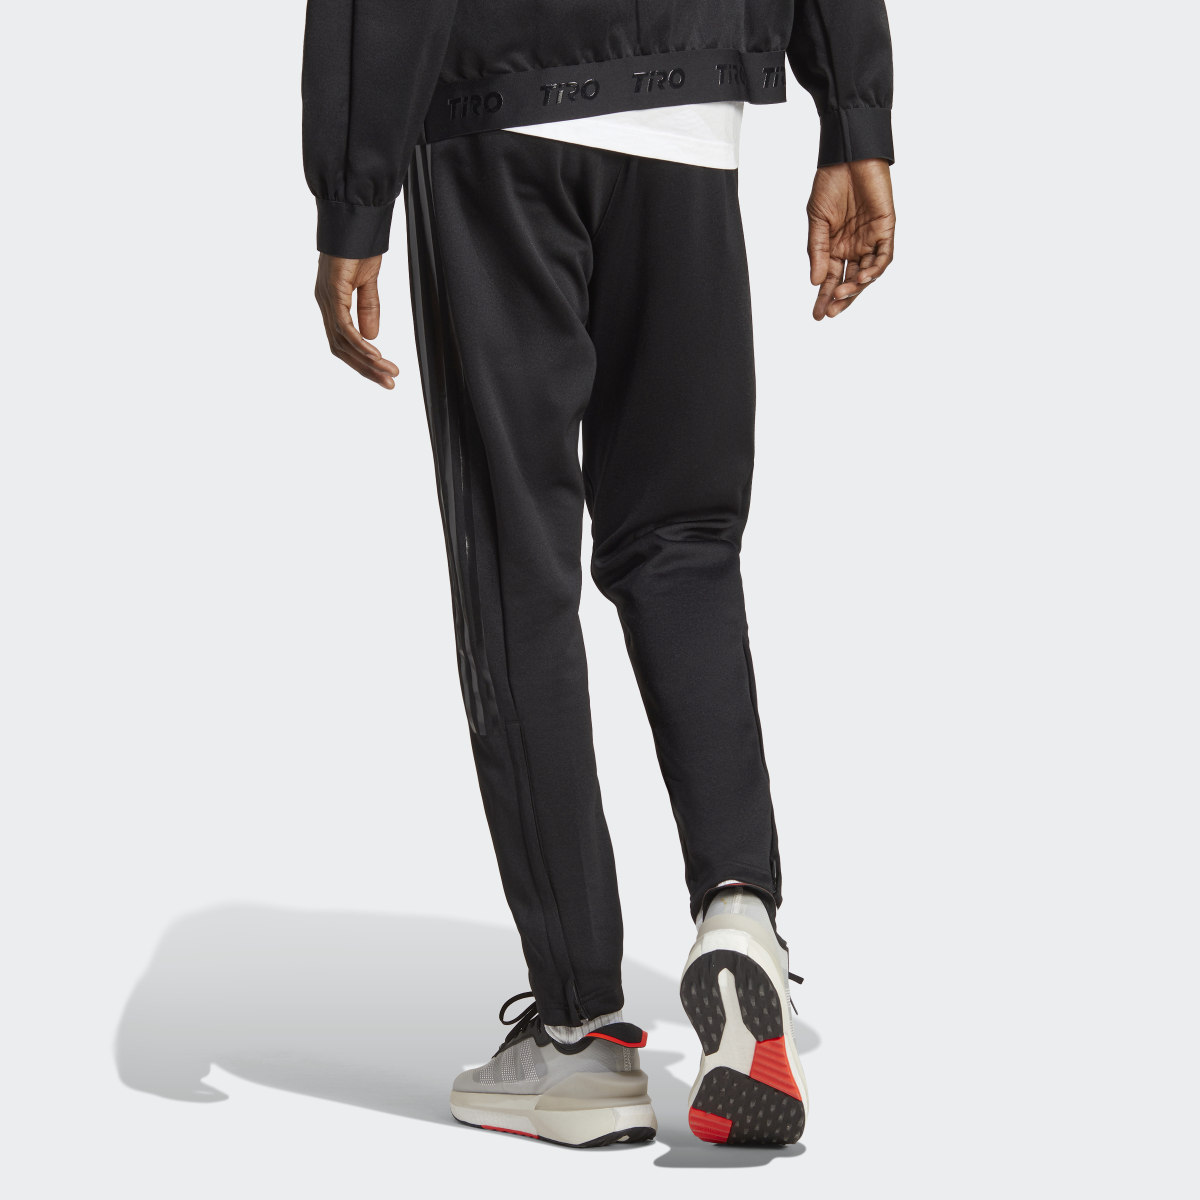 Adidas Pantaloni da allenamento Tiro Suit-Up Advanced. 7